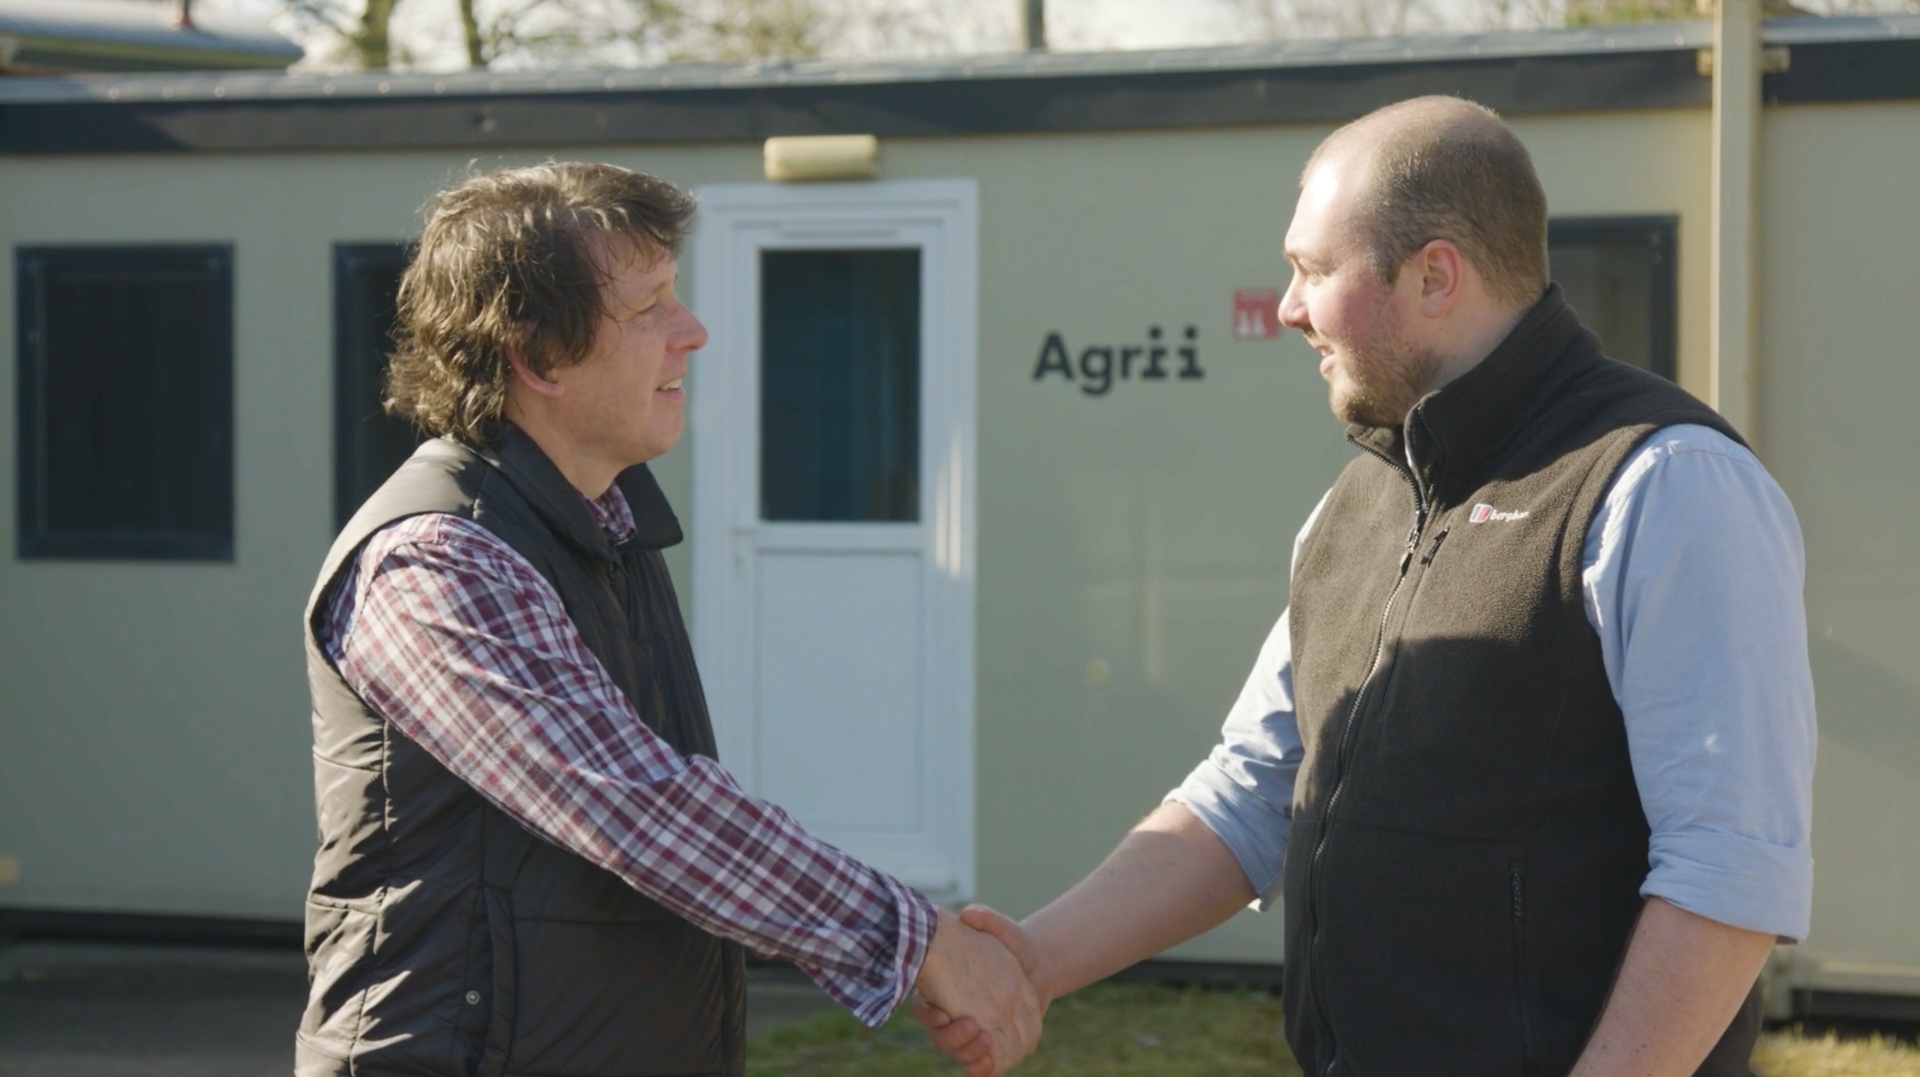 Origin Digital brings farmers and advisors together for Ag Retail success